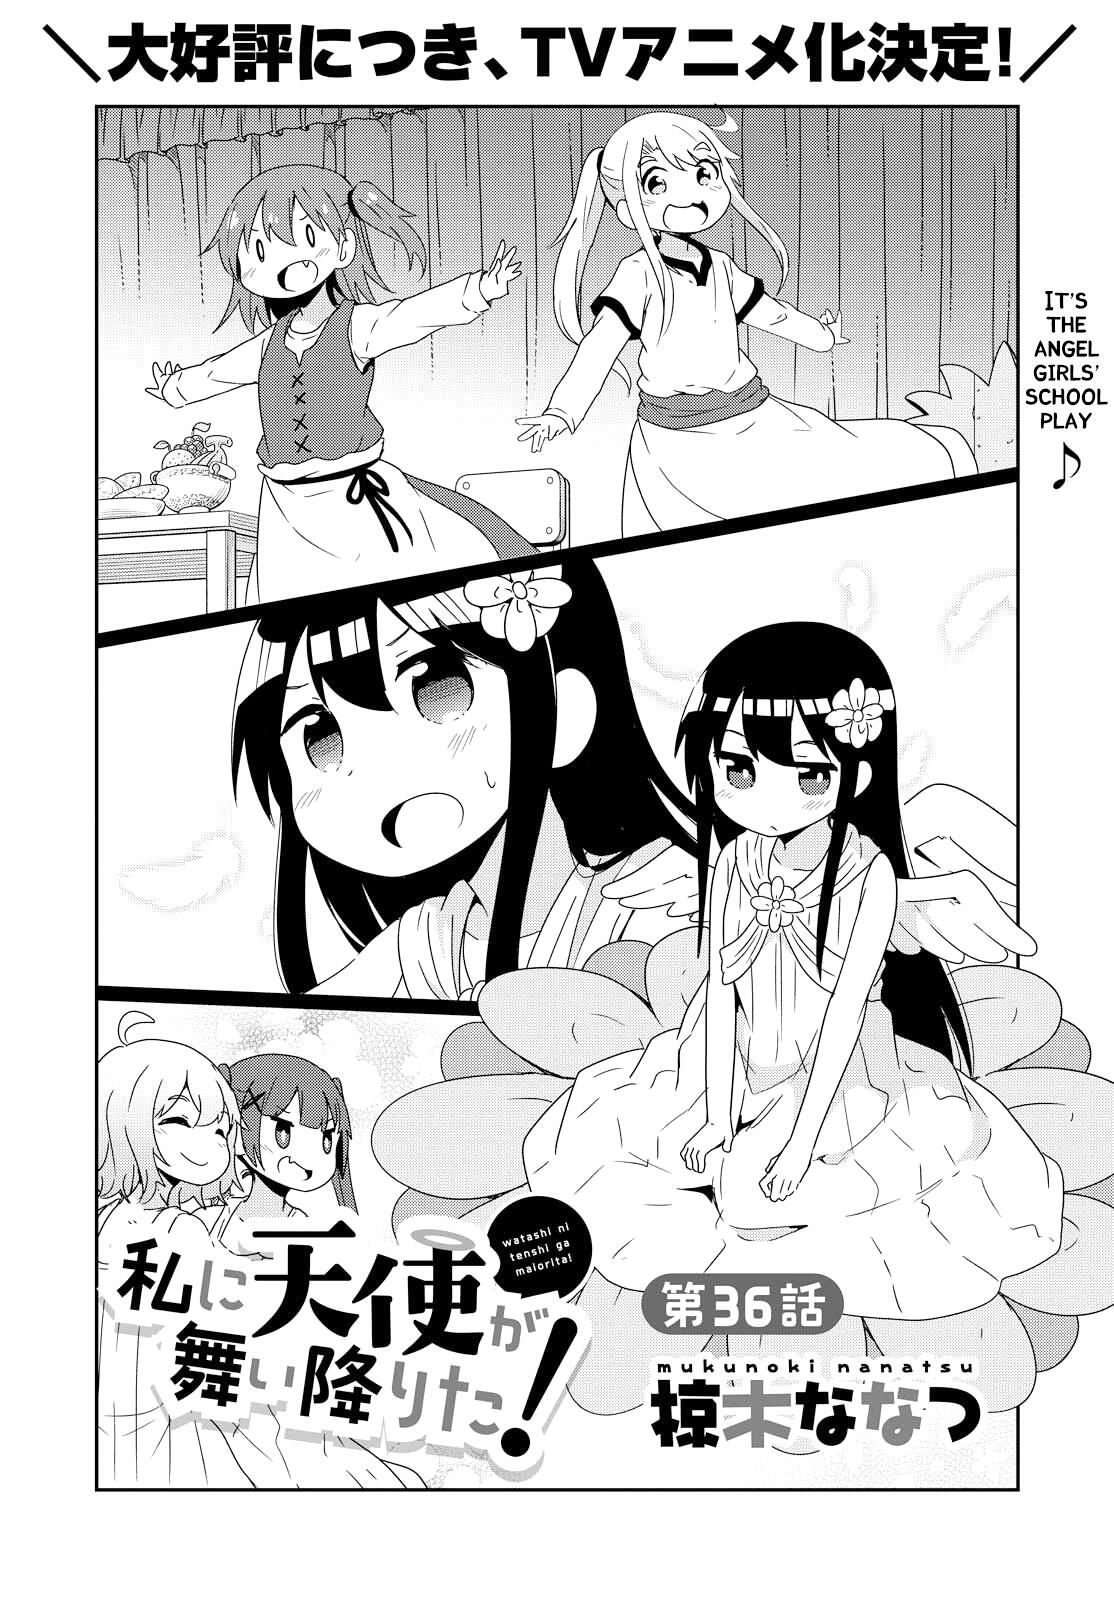 Watashi ni Tenshi ga Maiorita! Manga - Read Manga Online Free